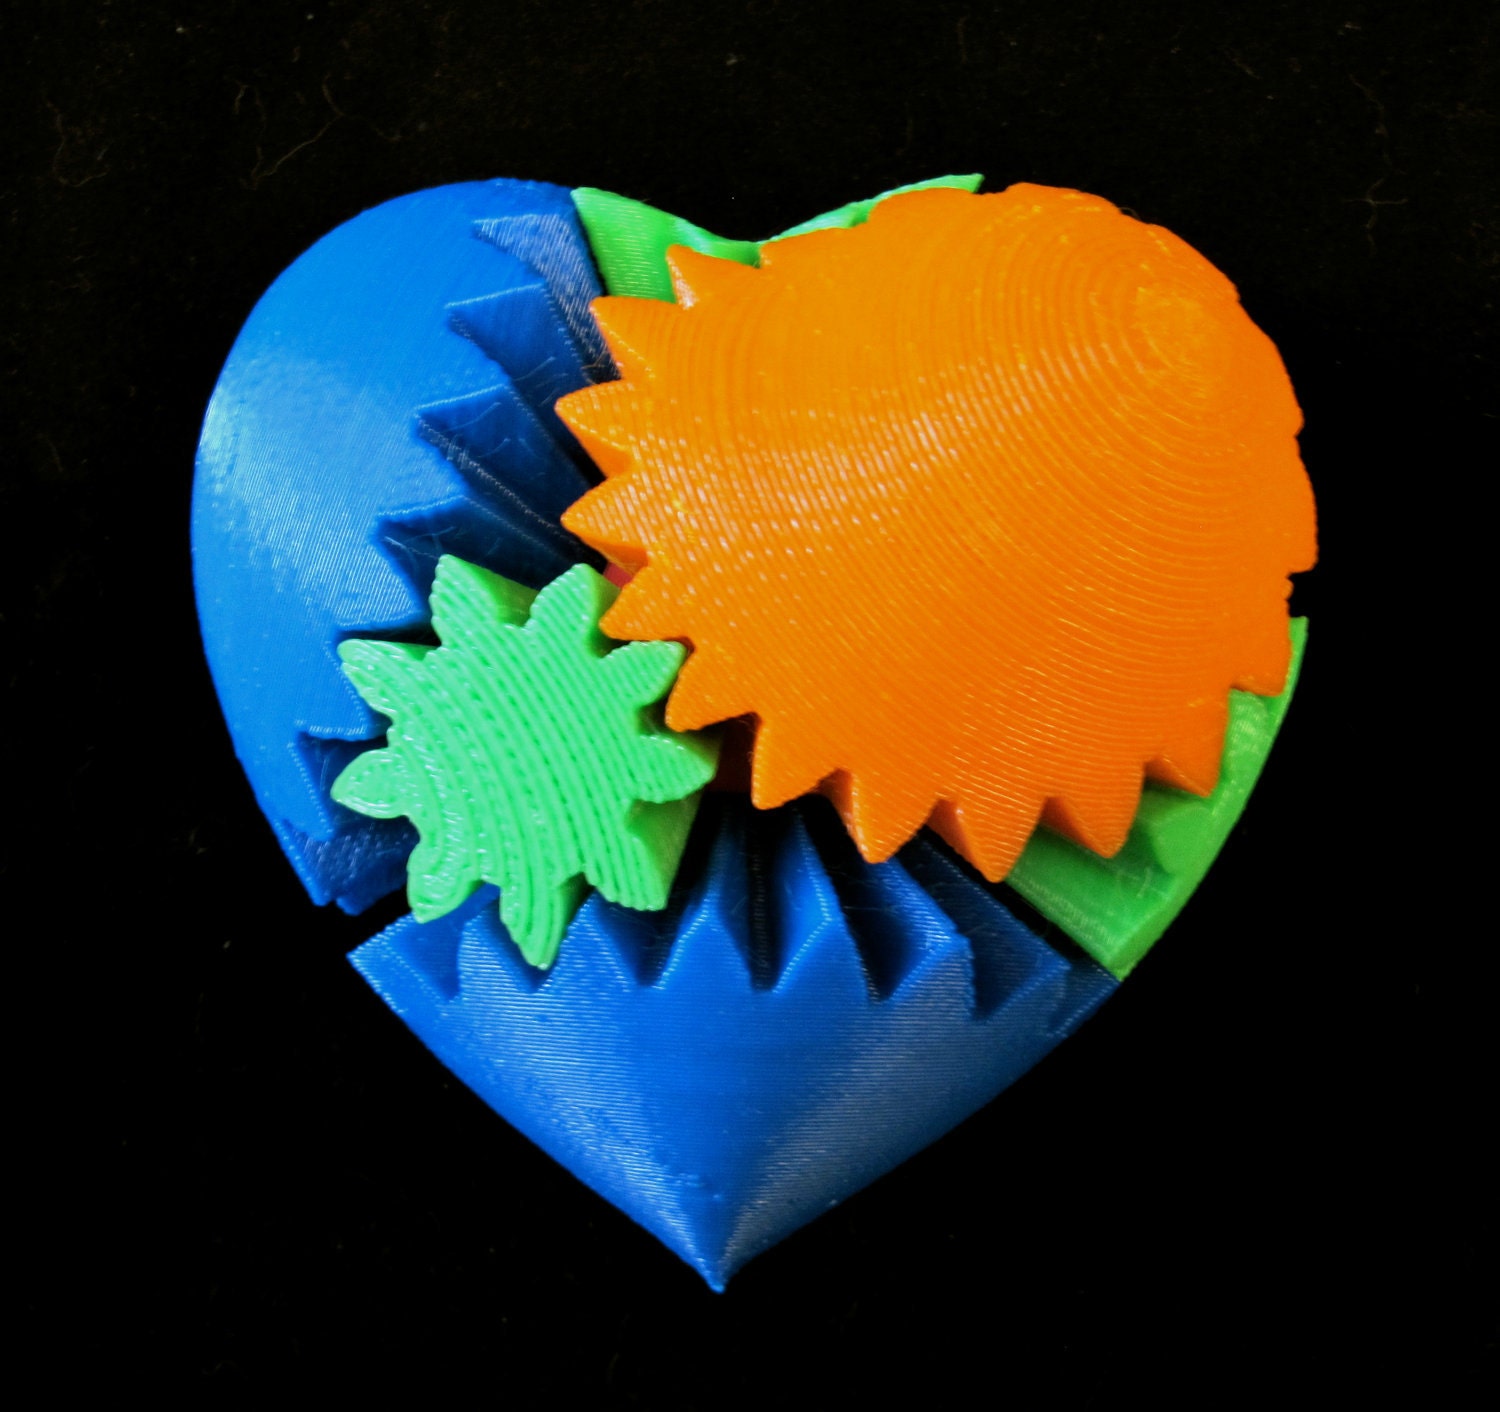 Geek Love 3D Printed Mechanical Gear Heart Toy